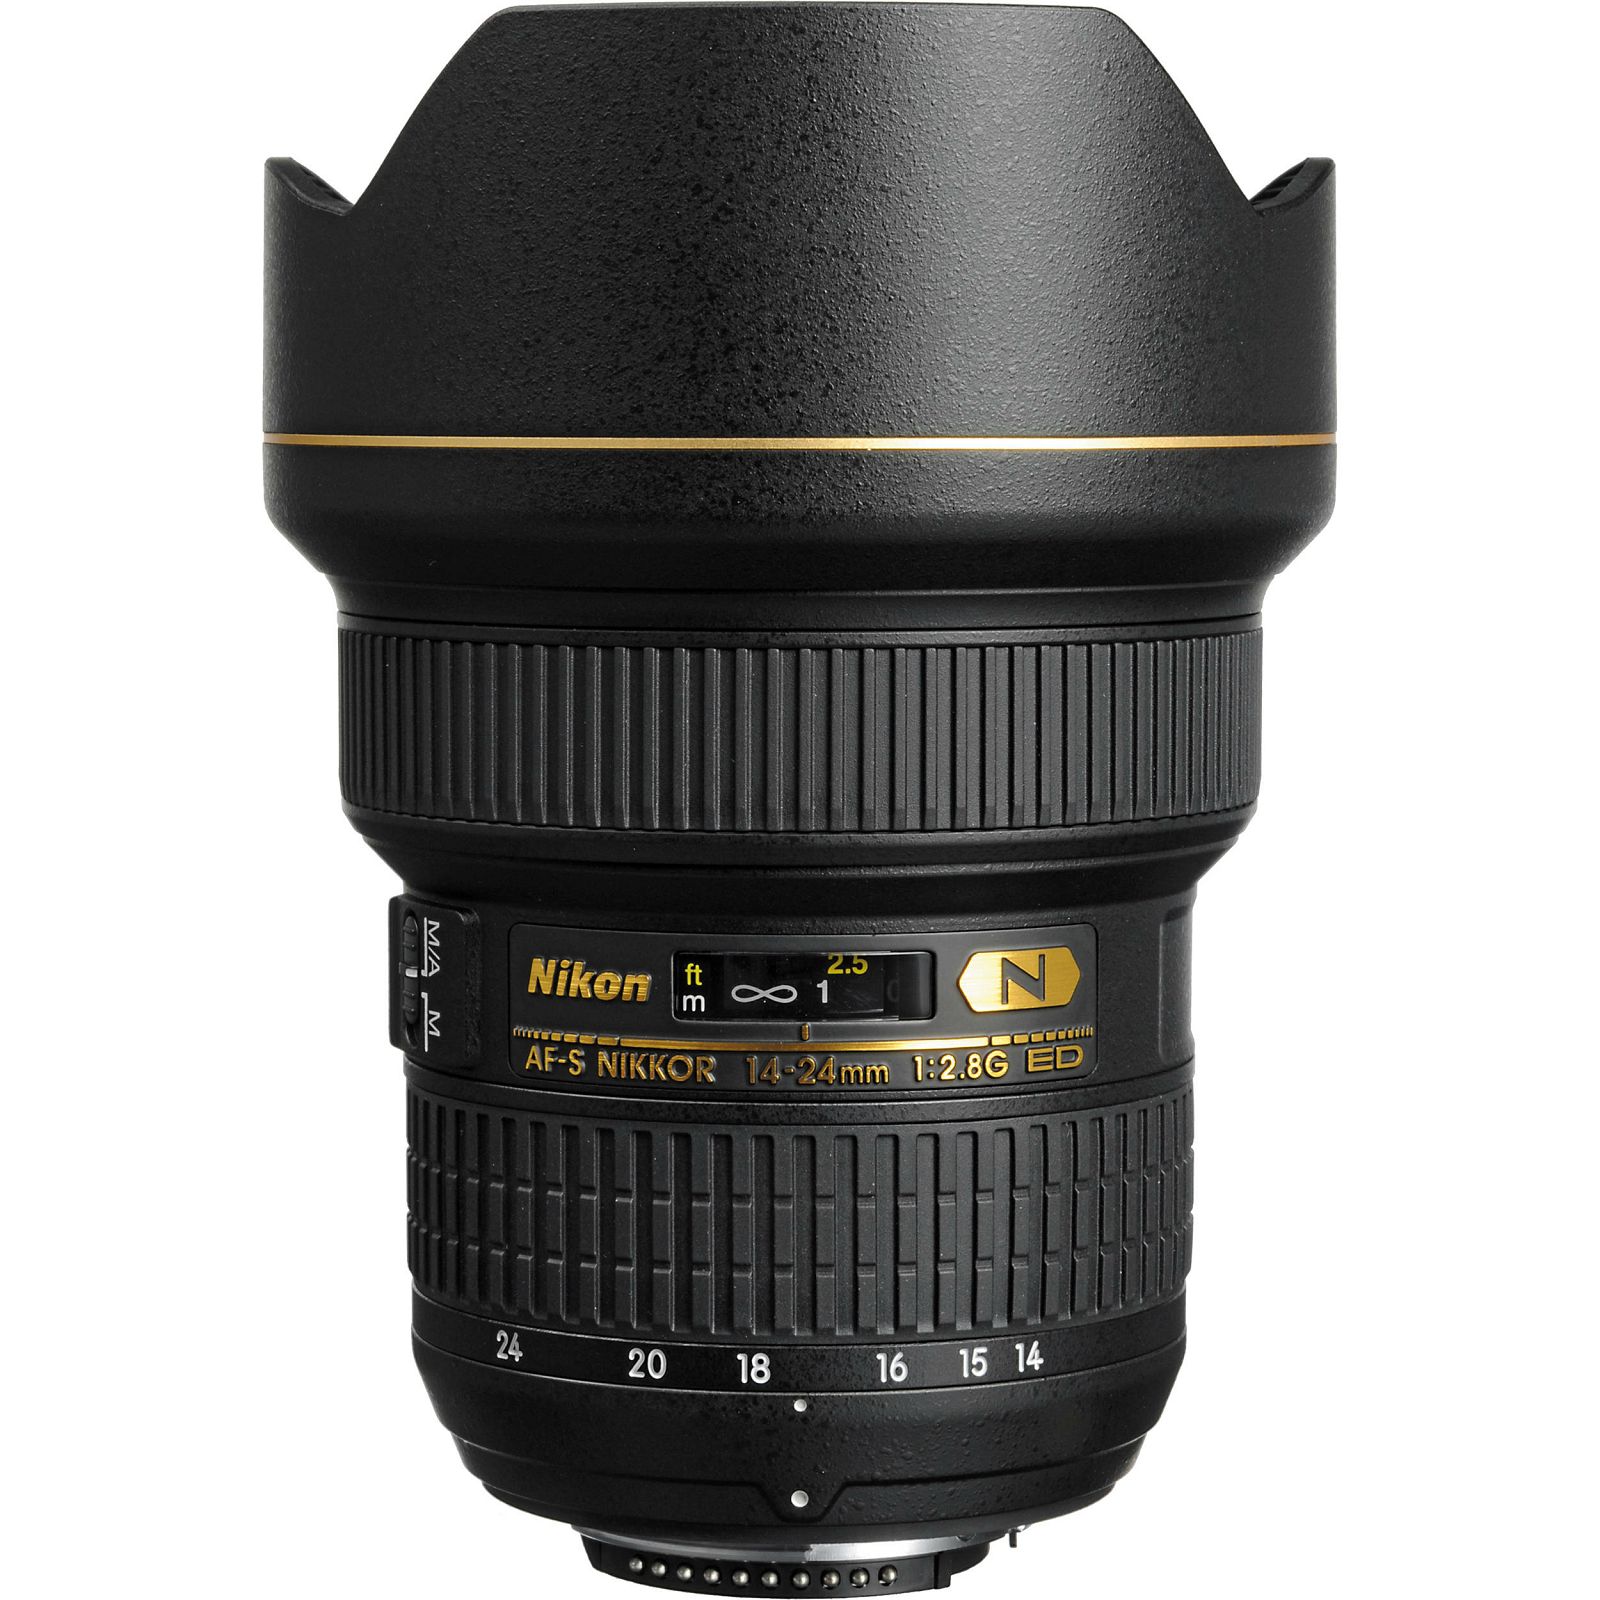 Nikon AF-S 14-24mm f/2.8G ED FX širokokutni objektiv Nikkor 14-24 2.8 f/2.8 G Professional auto focus wide angle zoom lens (JAA801DA)